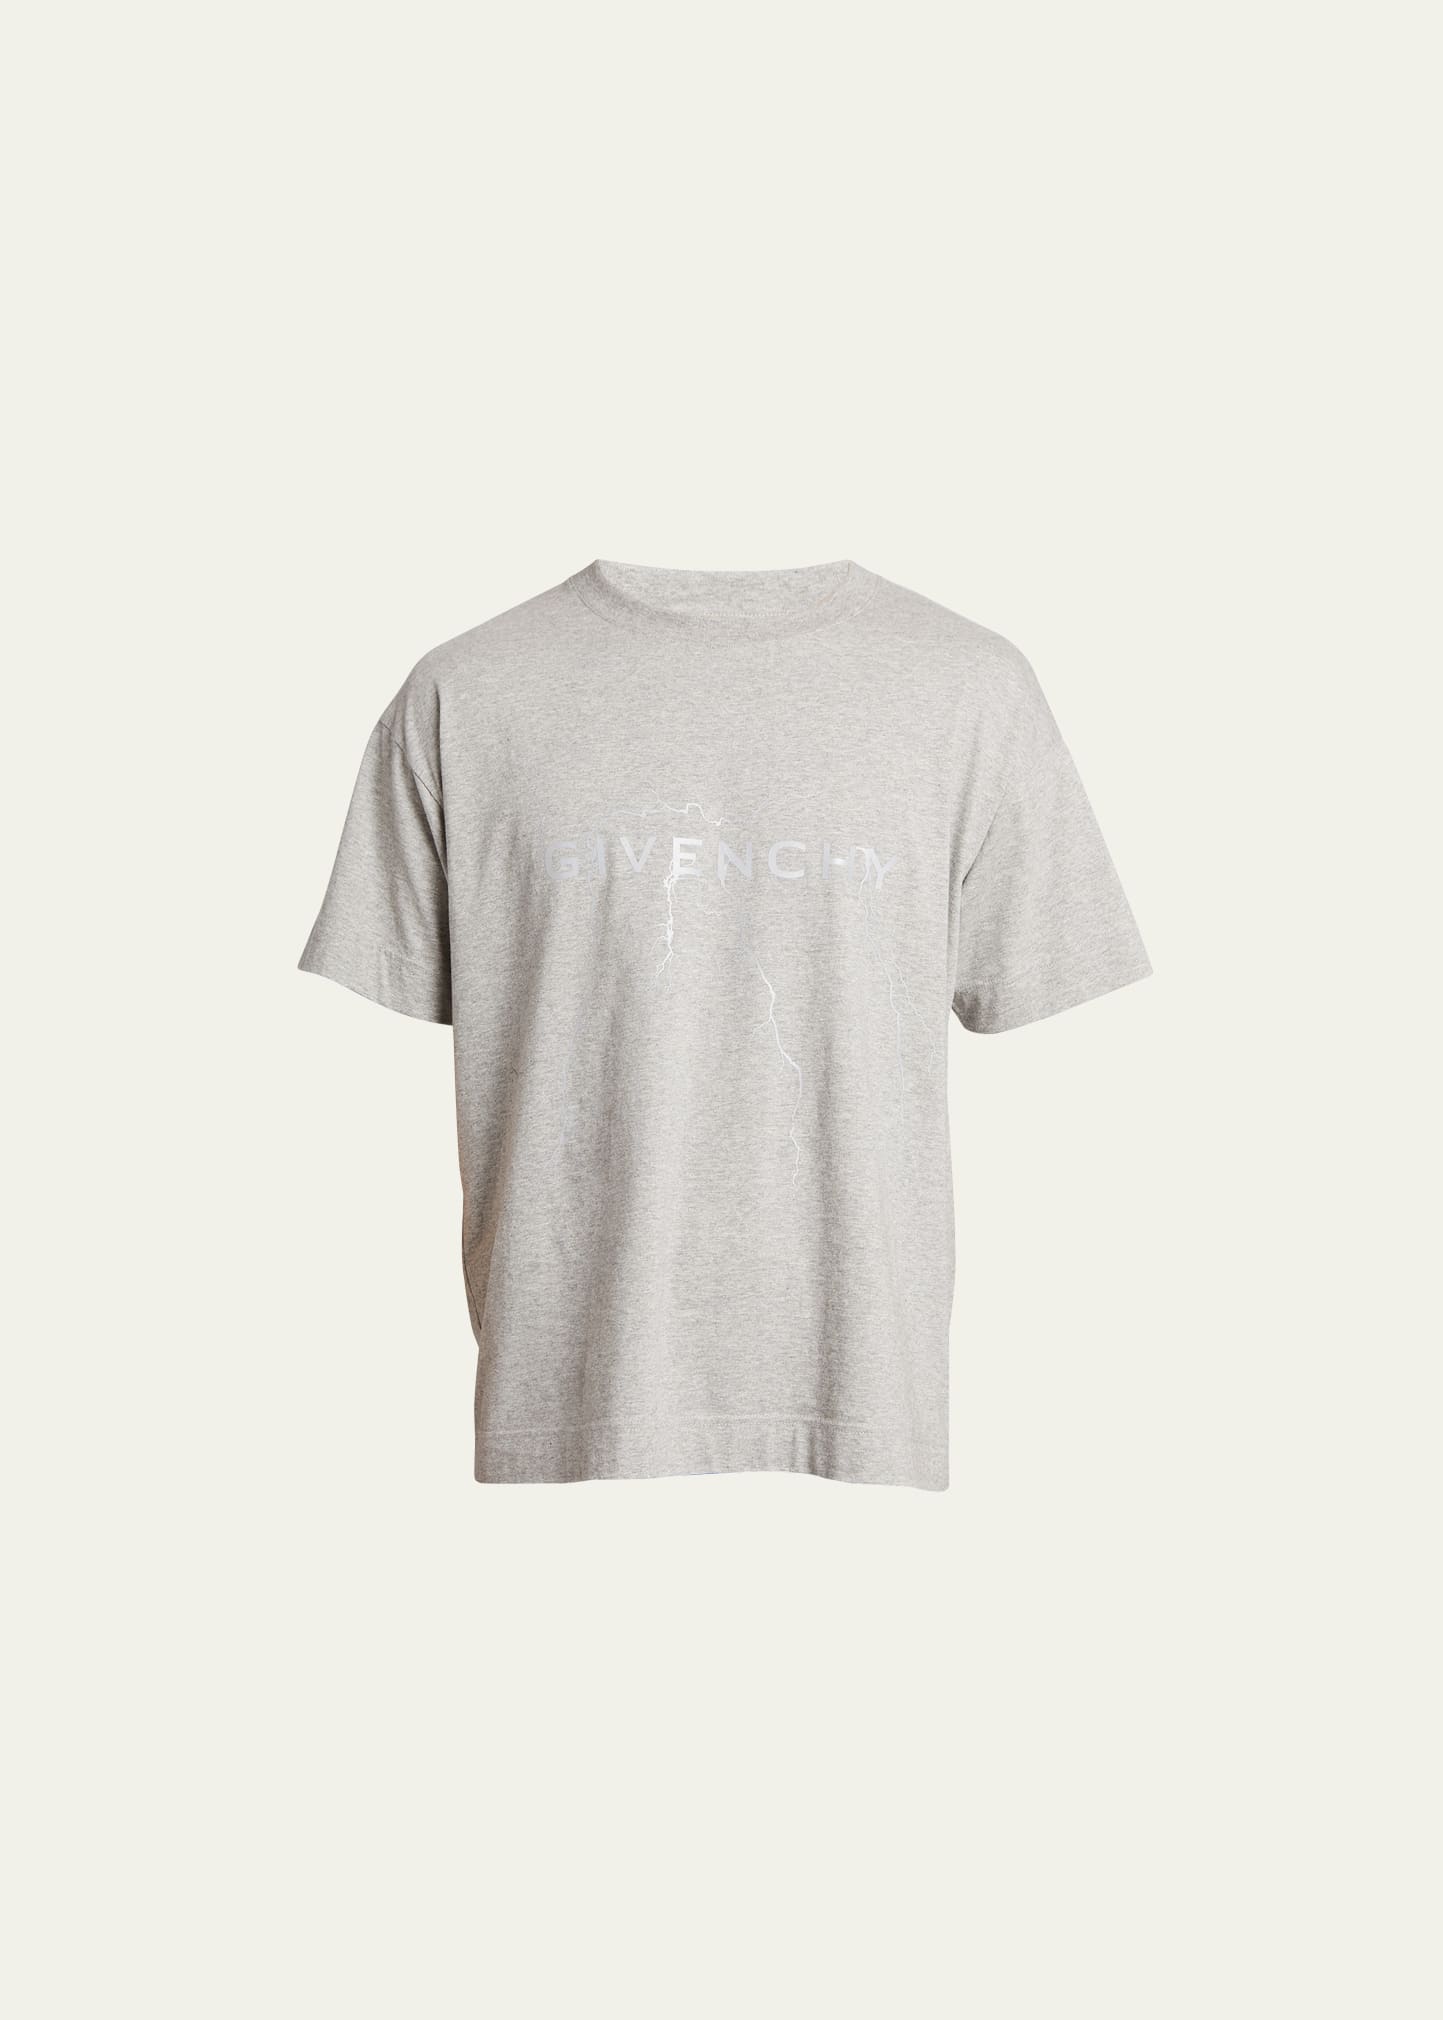 Givenchy Men's Jersey Lightning Logo Boxy T-shirt In Light Grey Melang